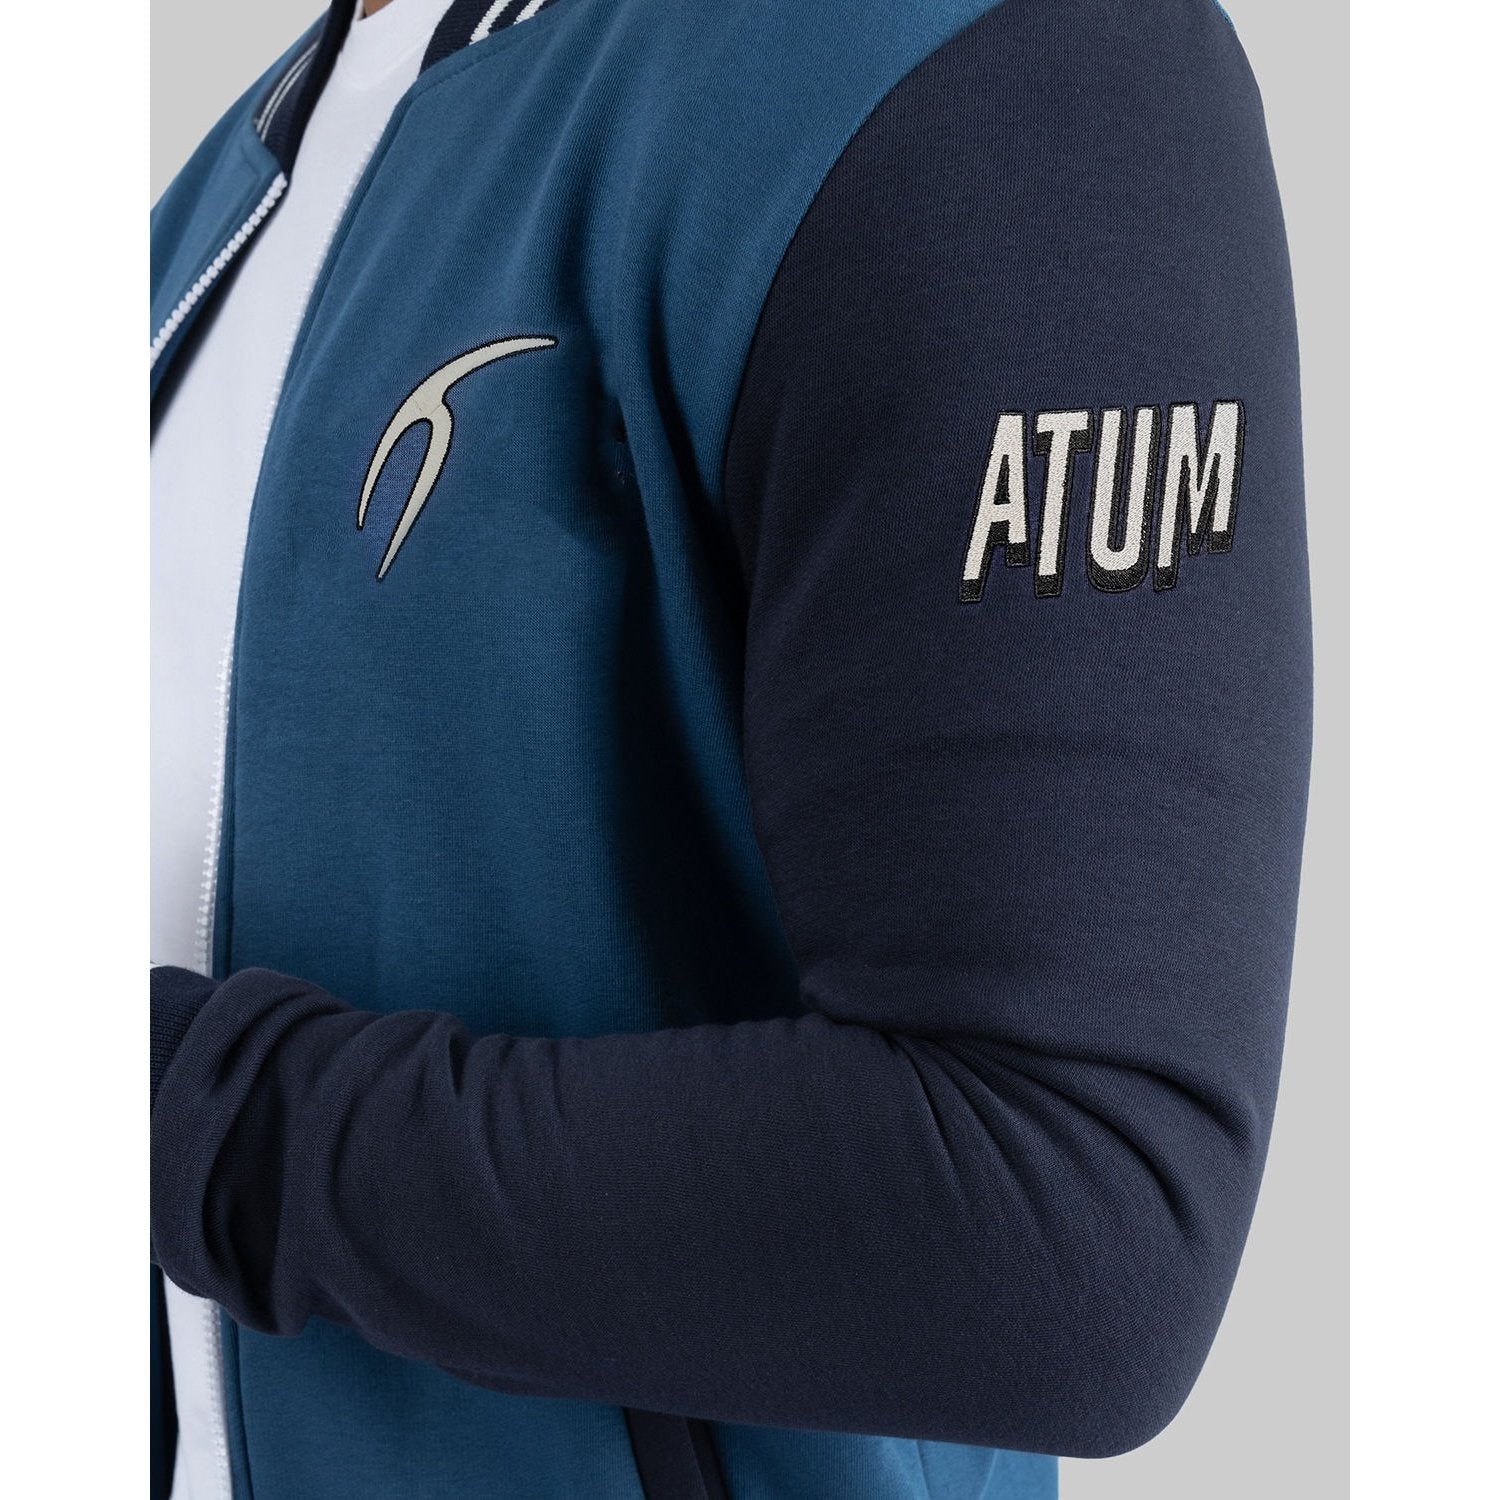 Atum Men's Varsity Jacket